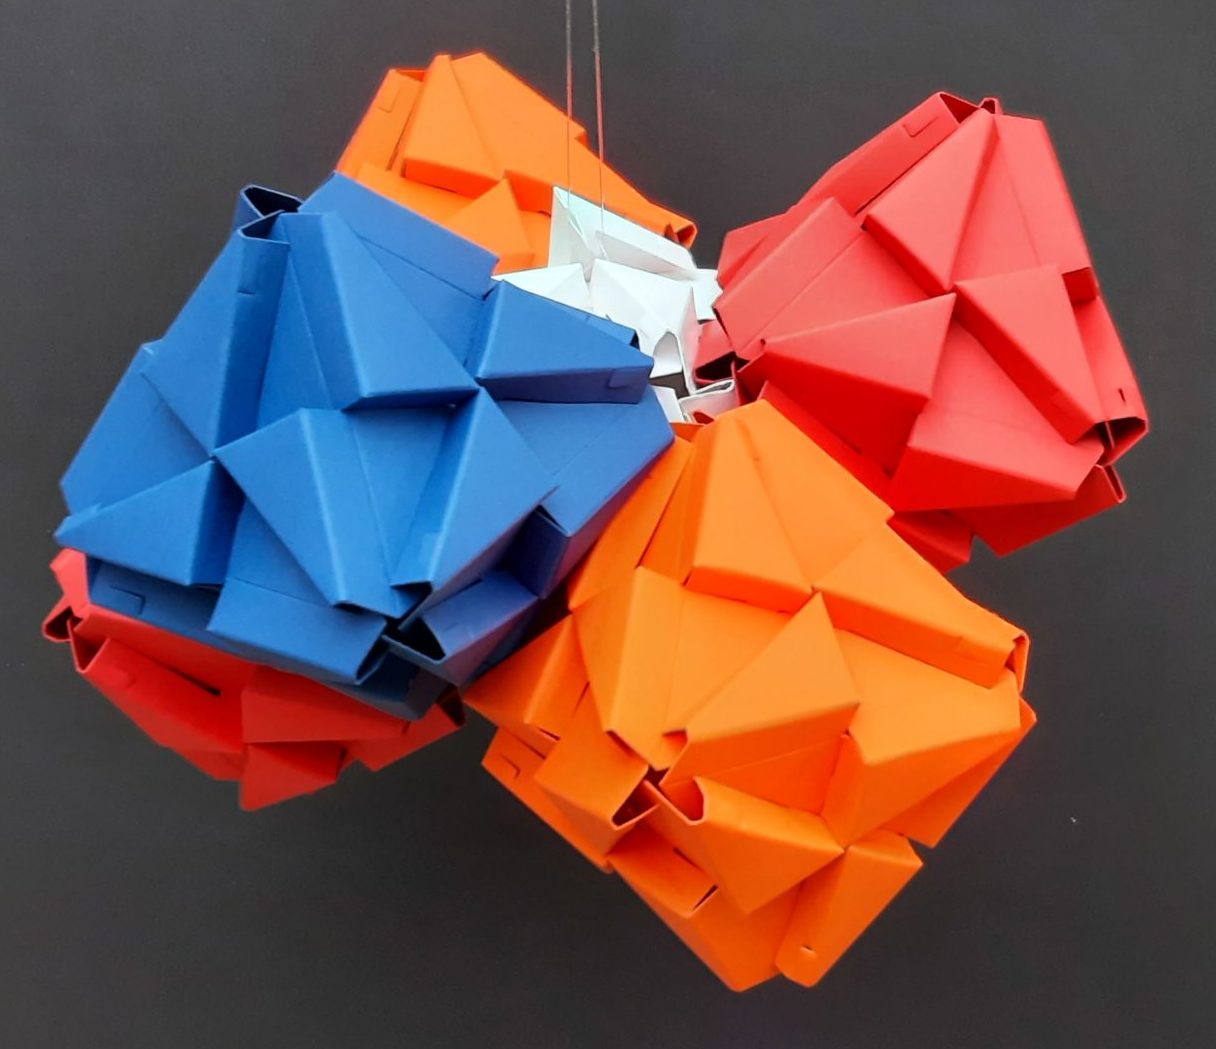 Jonathan Bobrow (Compound of seven octahedra)